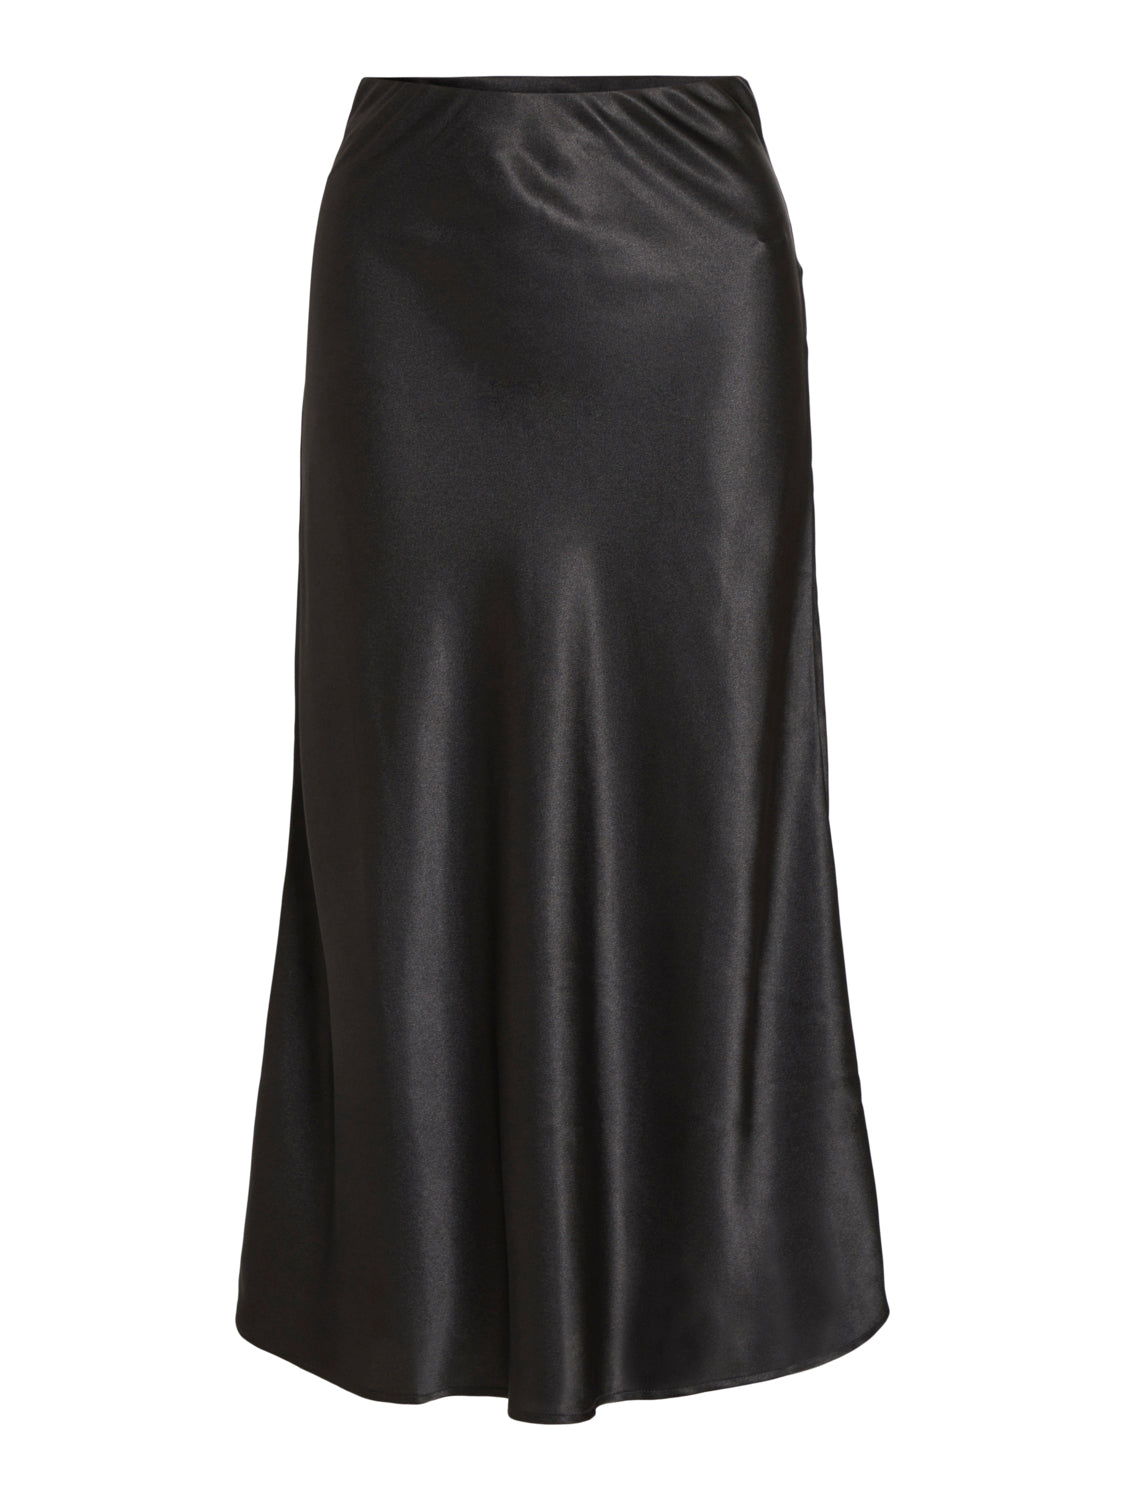 VISCHADYA Skirt - Black